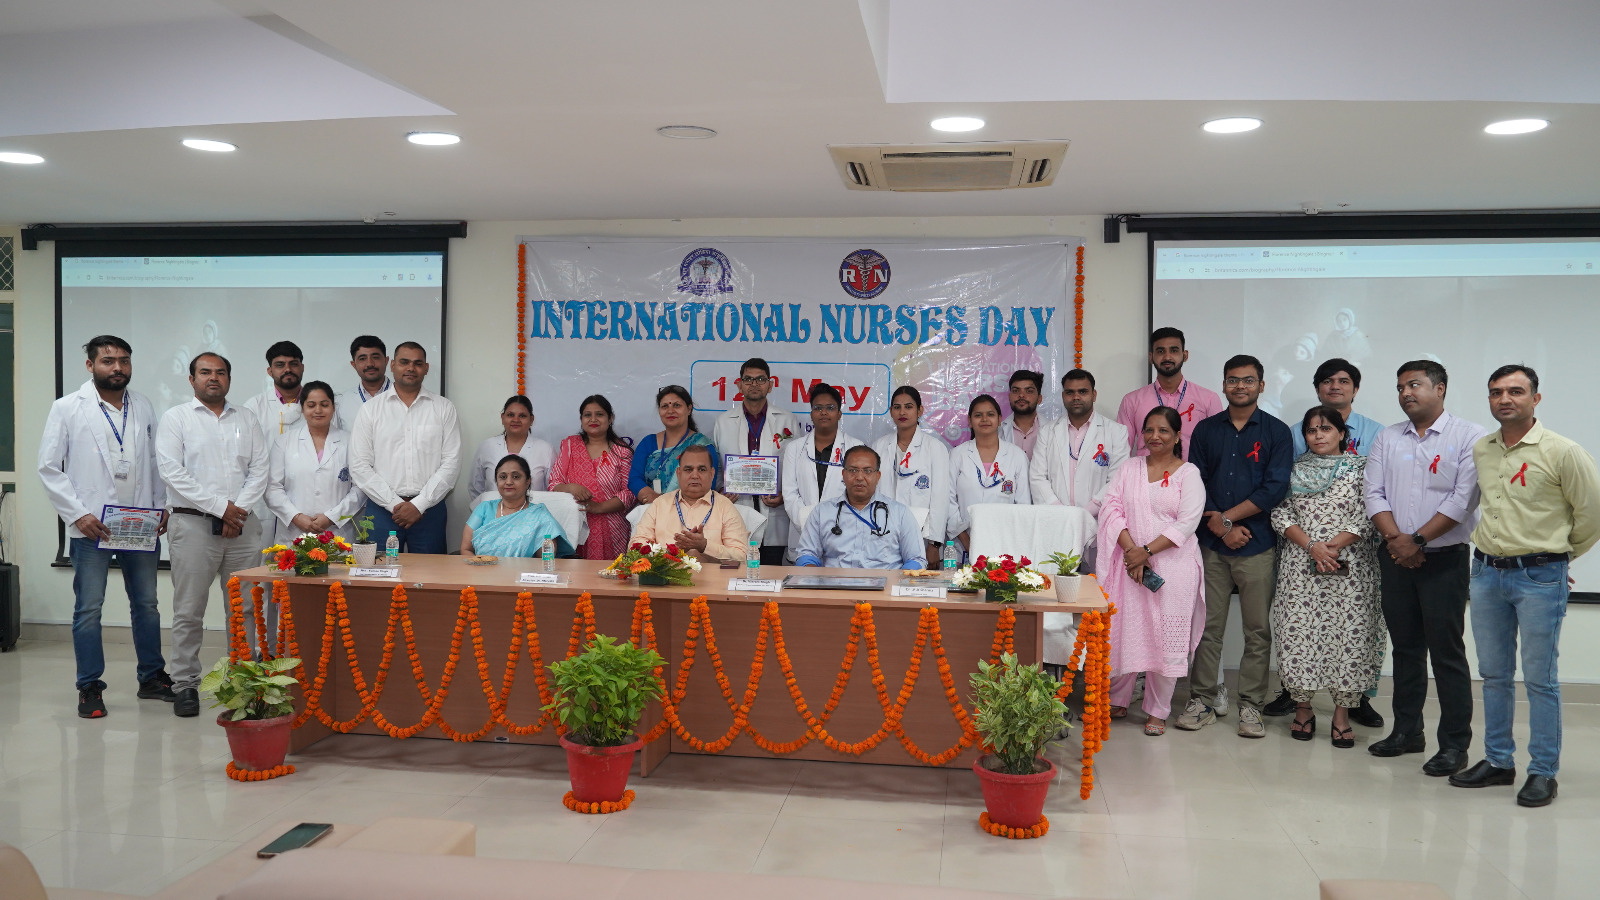 International.nurses day 